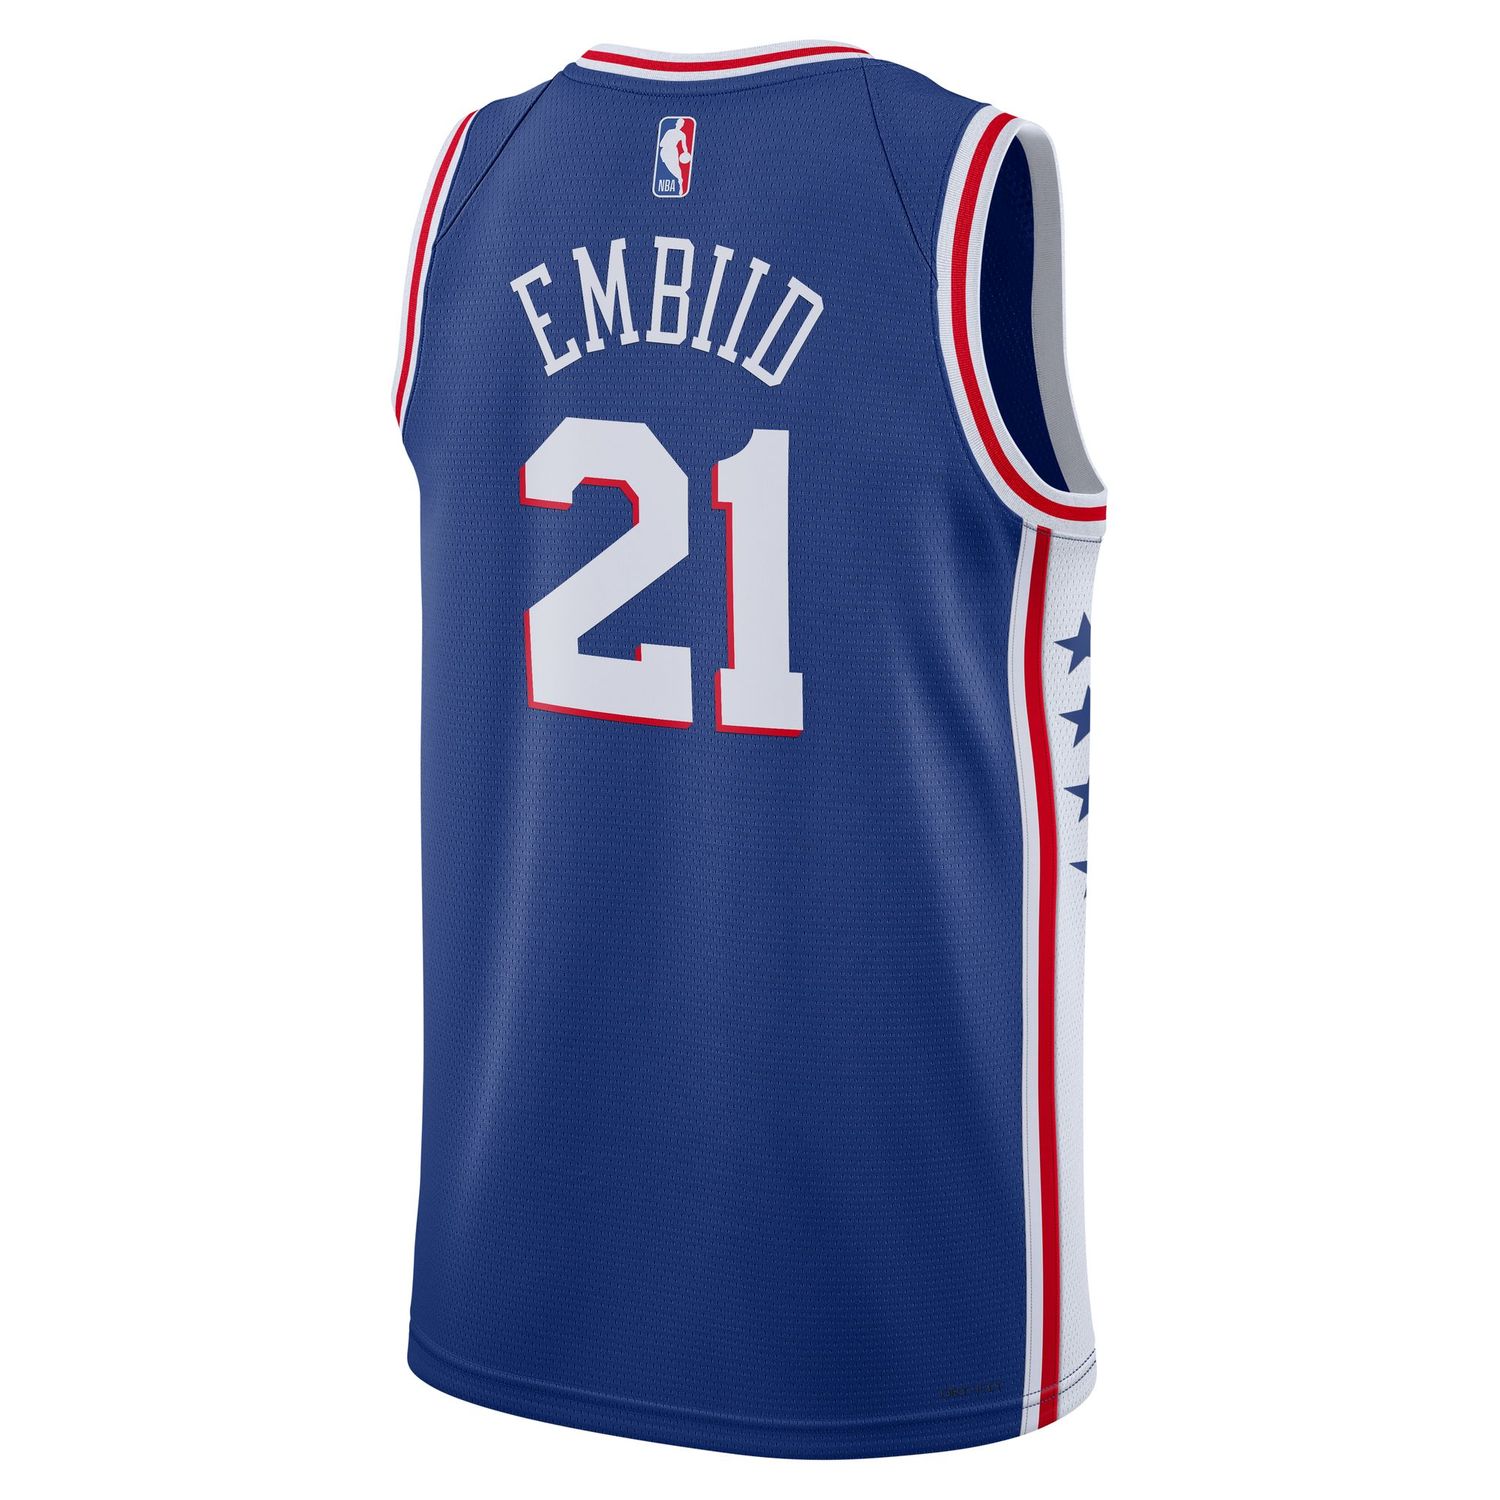 Nike Joel Embiid NBA Icon Edition Swingman Jersey